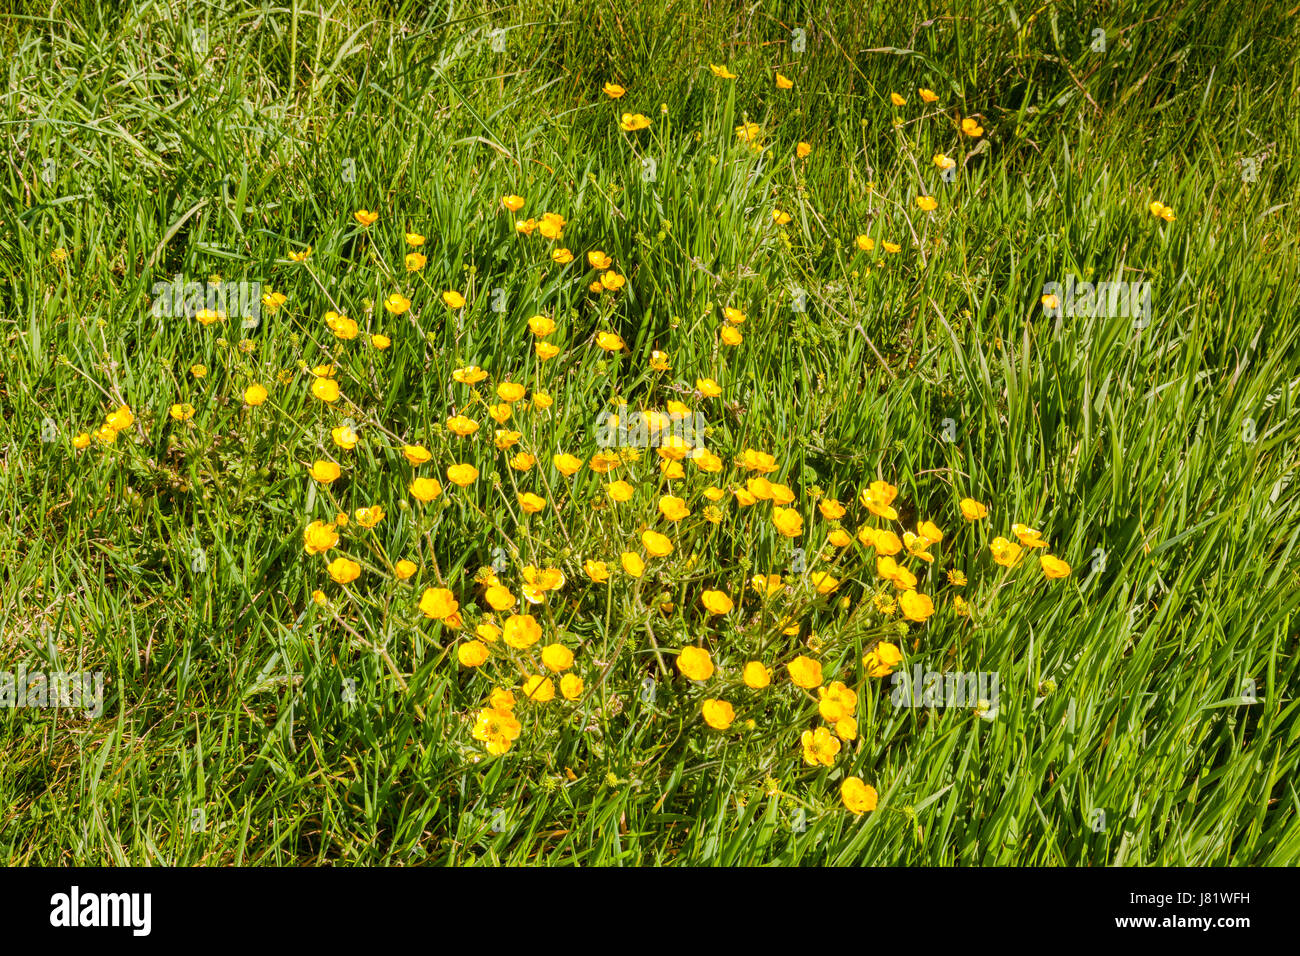 Buttercups (Ranunculus) growing in long grass. Stock Photo